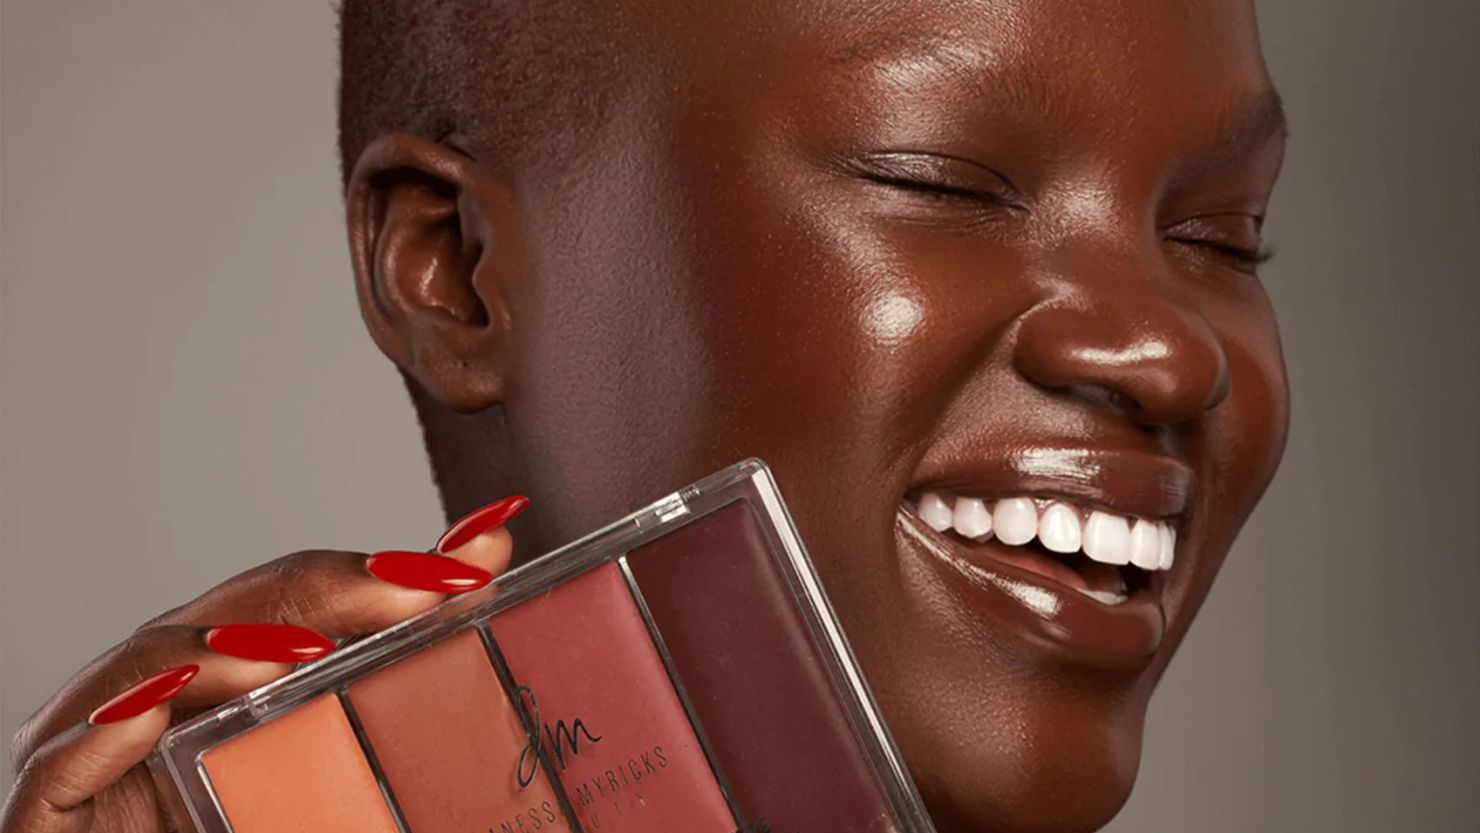 Reviewed: Danessa Myricks's Best Beauty Products